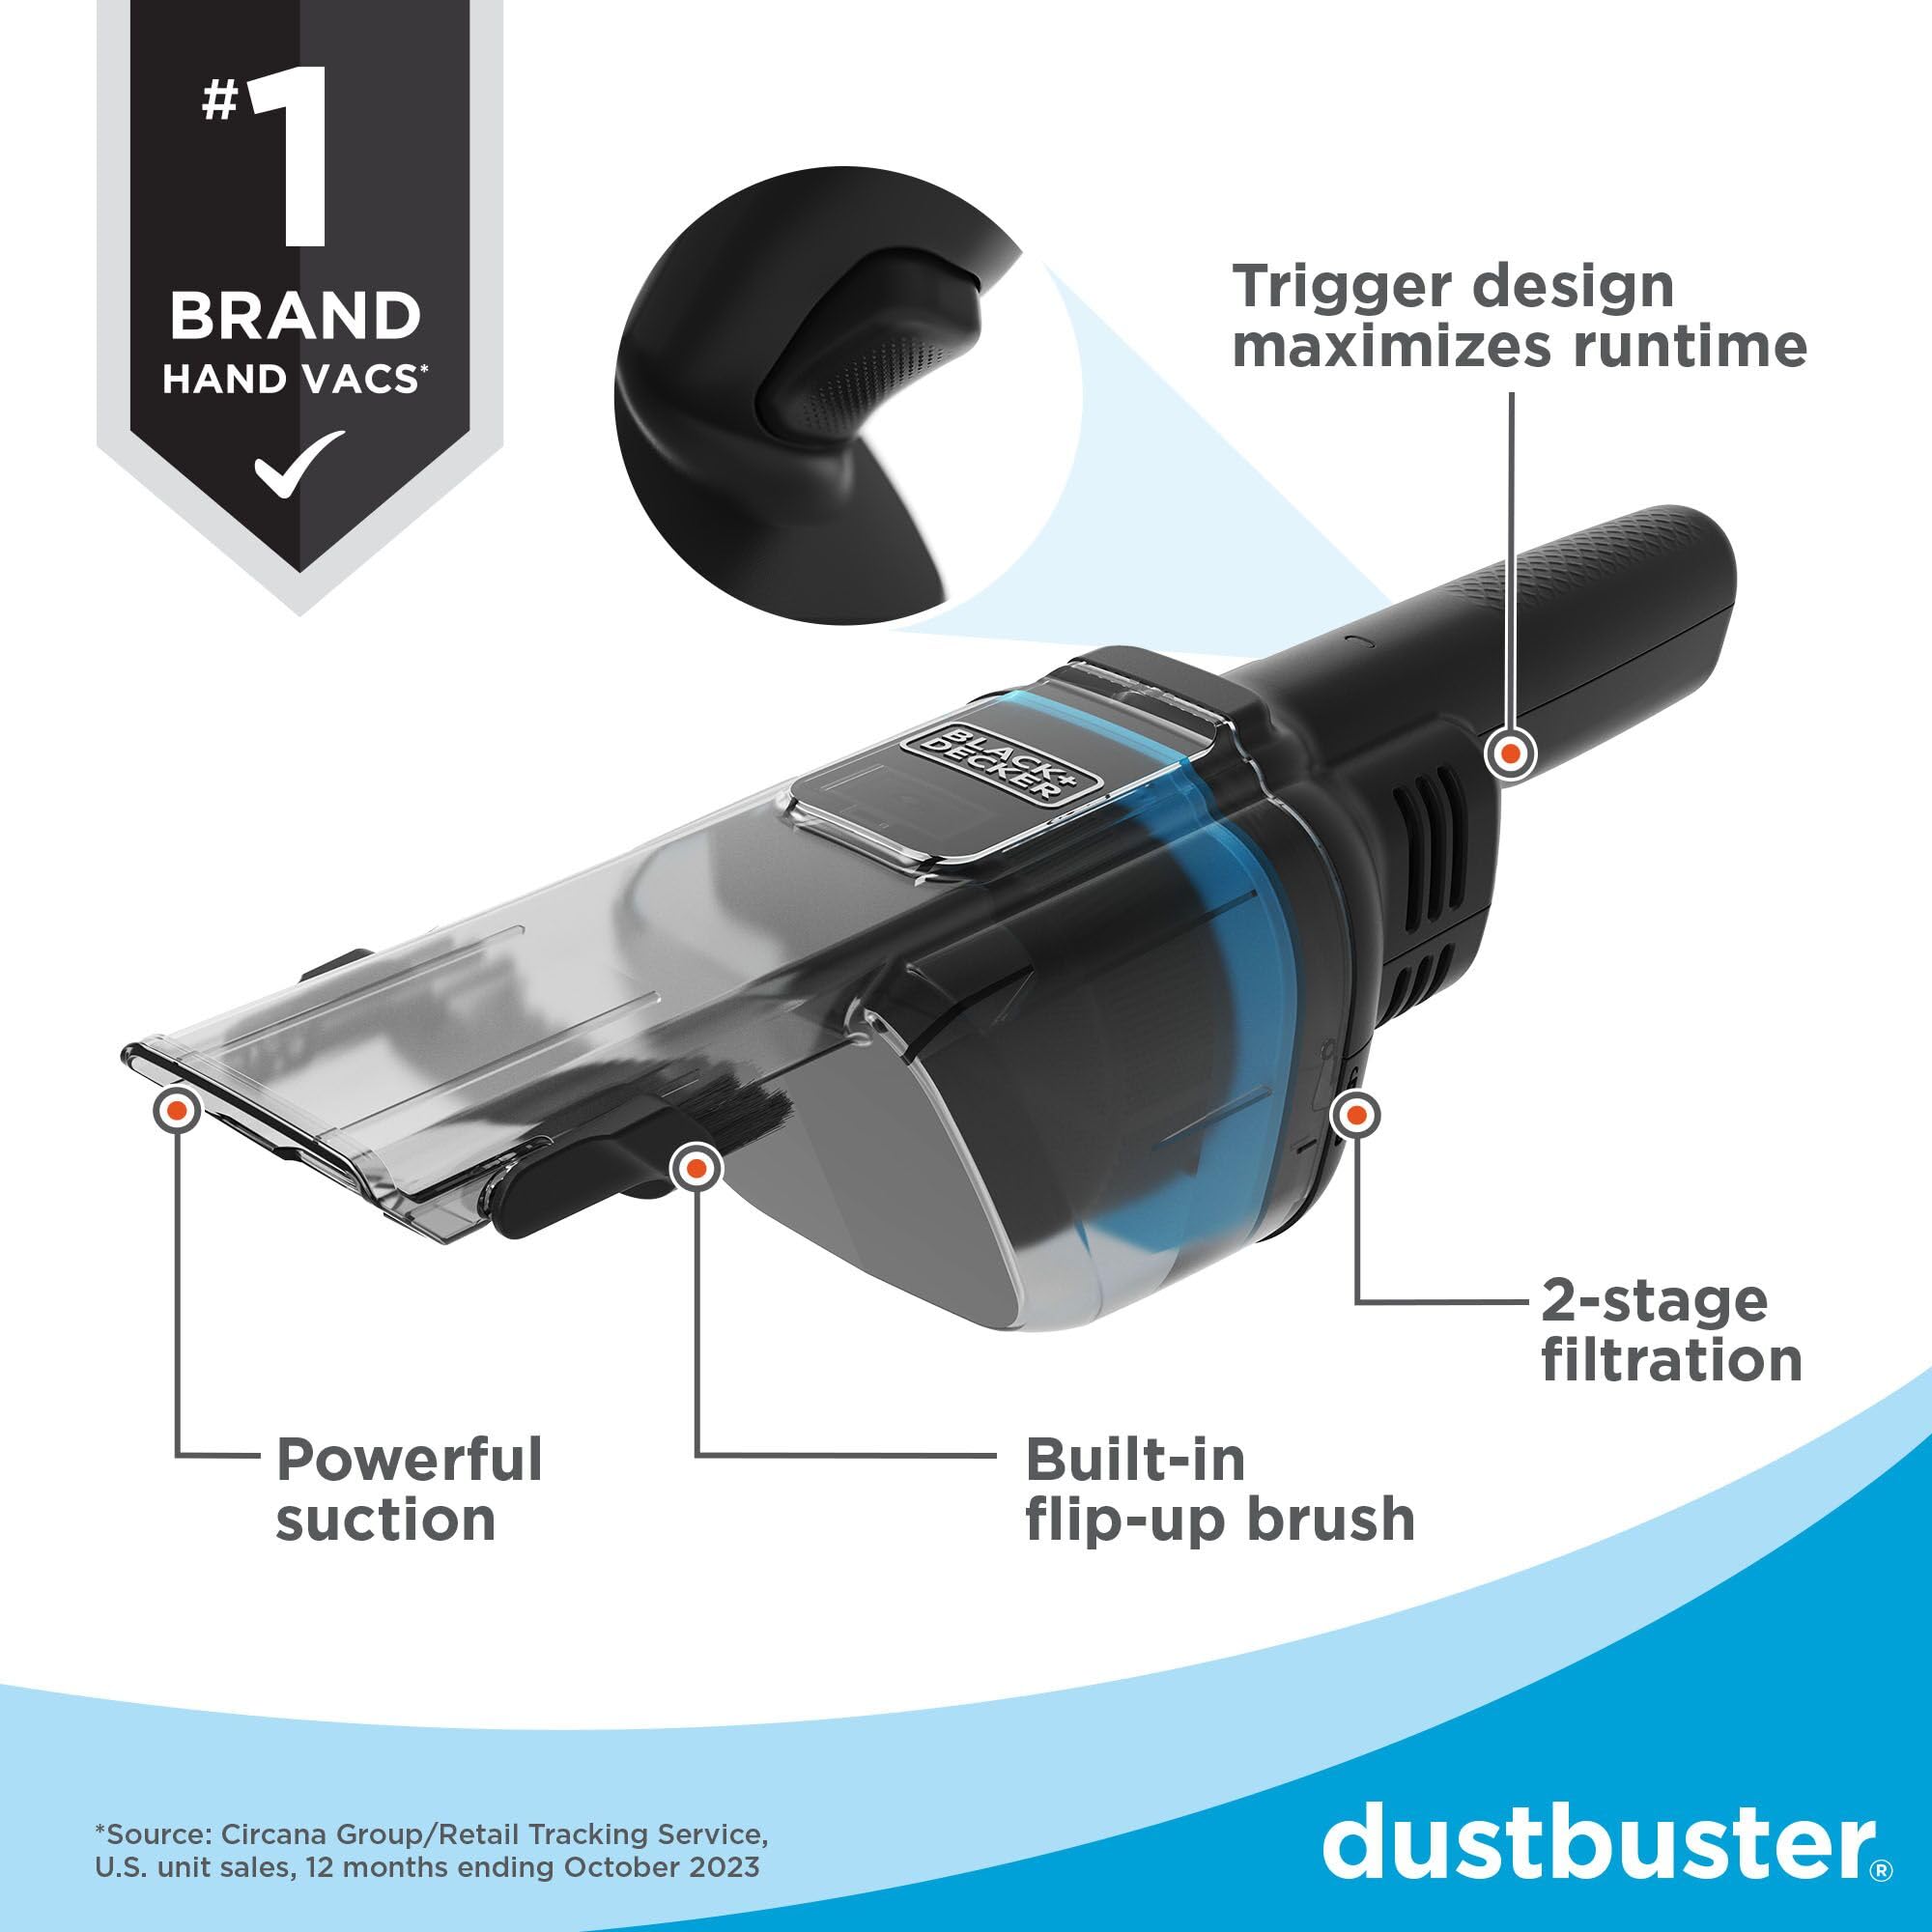 BLACK+DECKER dustbuster blast Cordless Handheld Vacuum, Home and Car Vacuum (HNVD220J00)